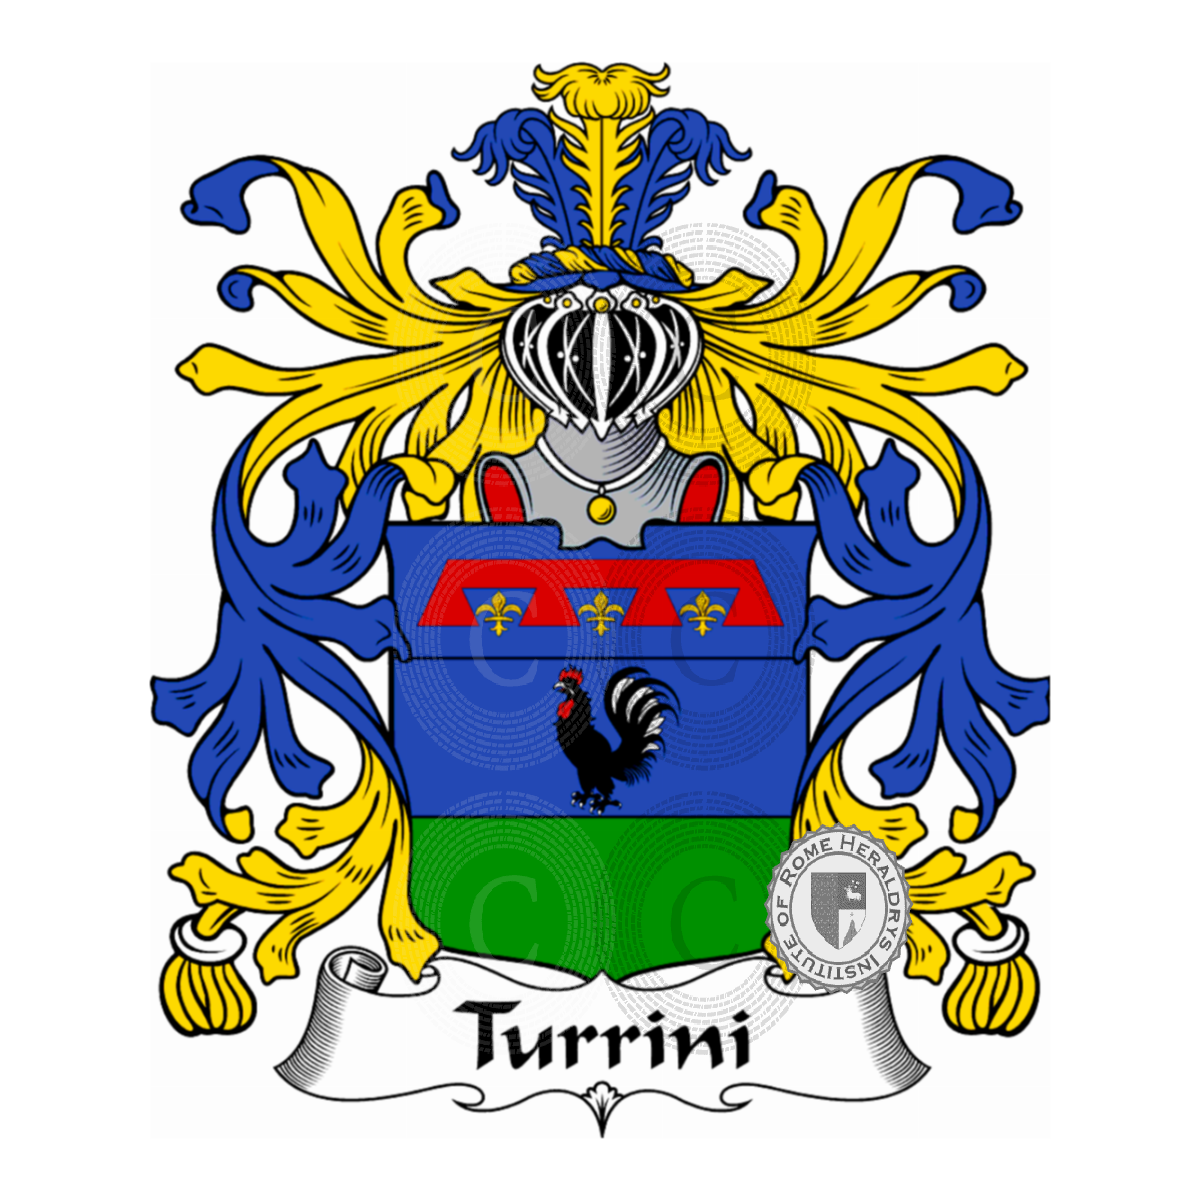 Brasão da famíliaTurrini, Ardenghi,De Thurin,Turin,Turina,Turini,Turino